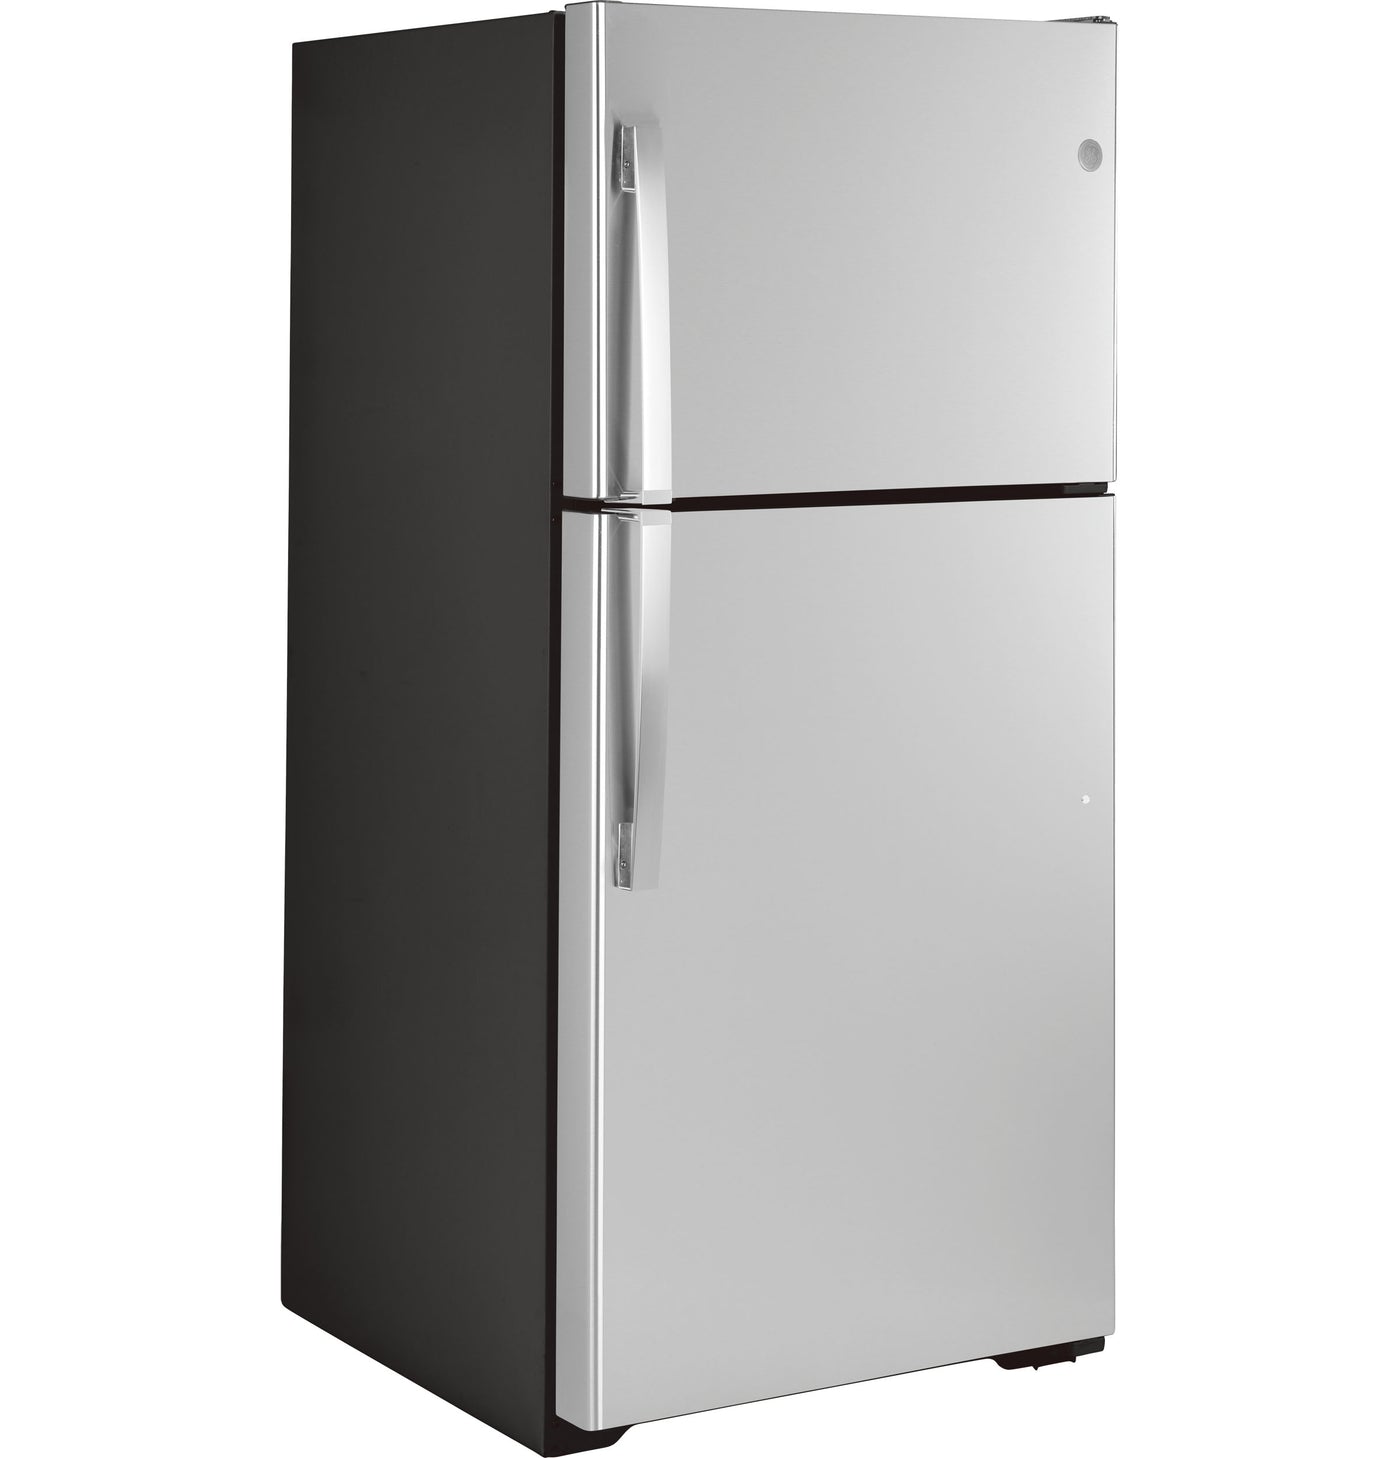 GE Appliances GIE19JSNRSS Top-Freezer Refrigerator 19.2 Cu. Ft with 1-Year Warranty